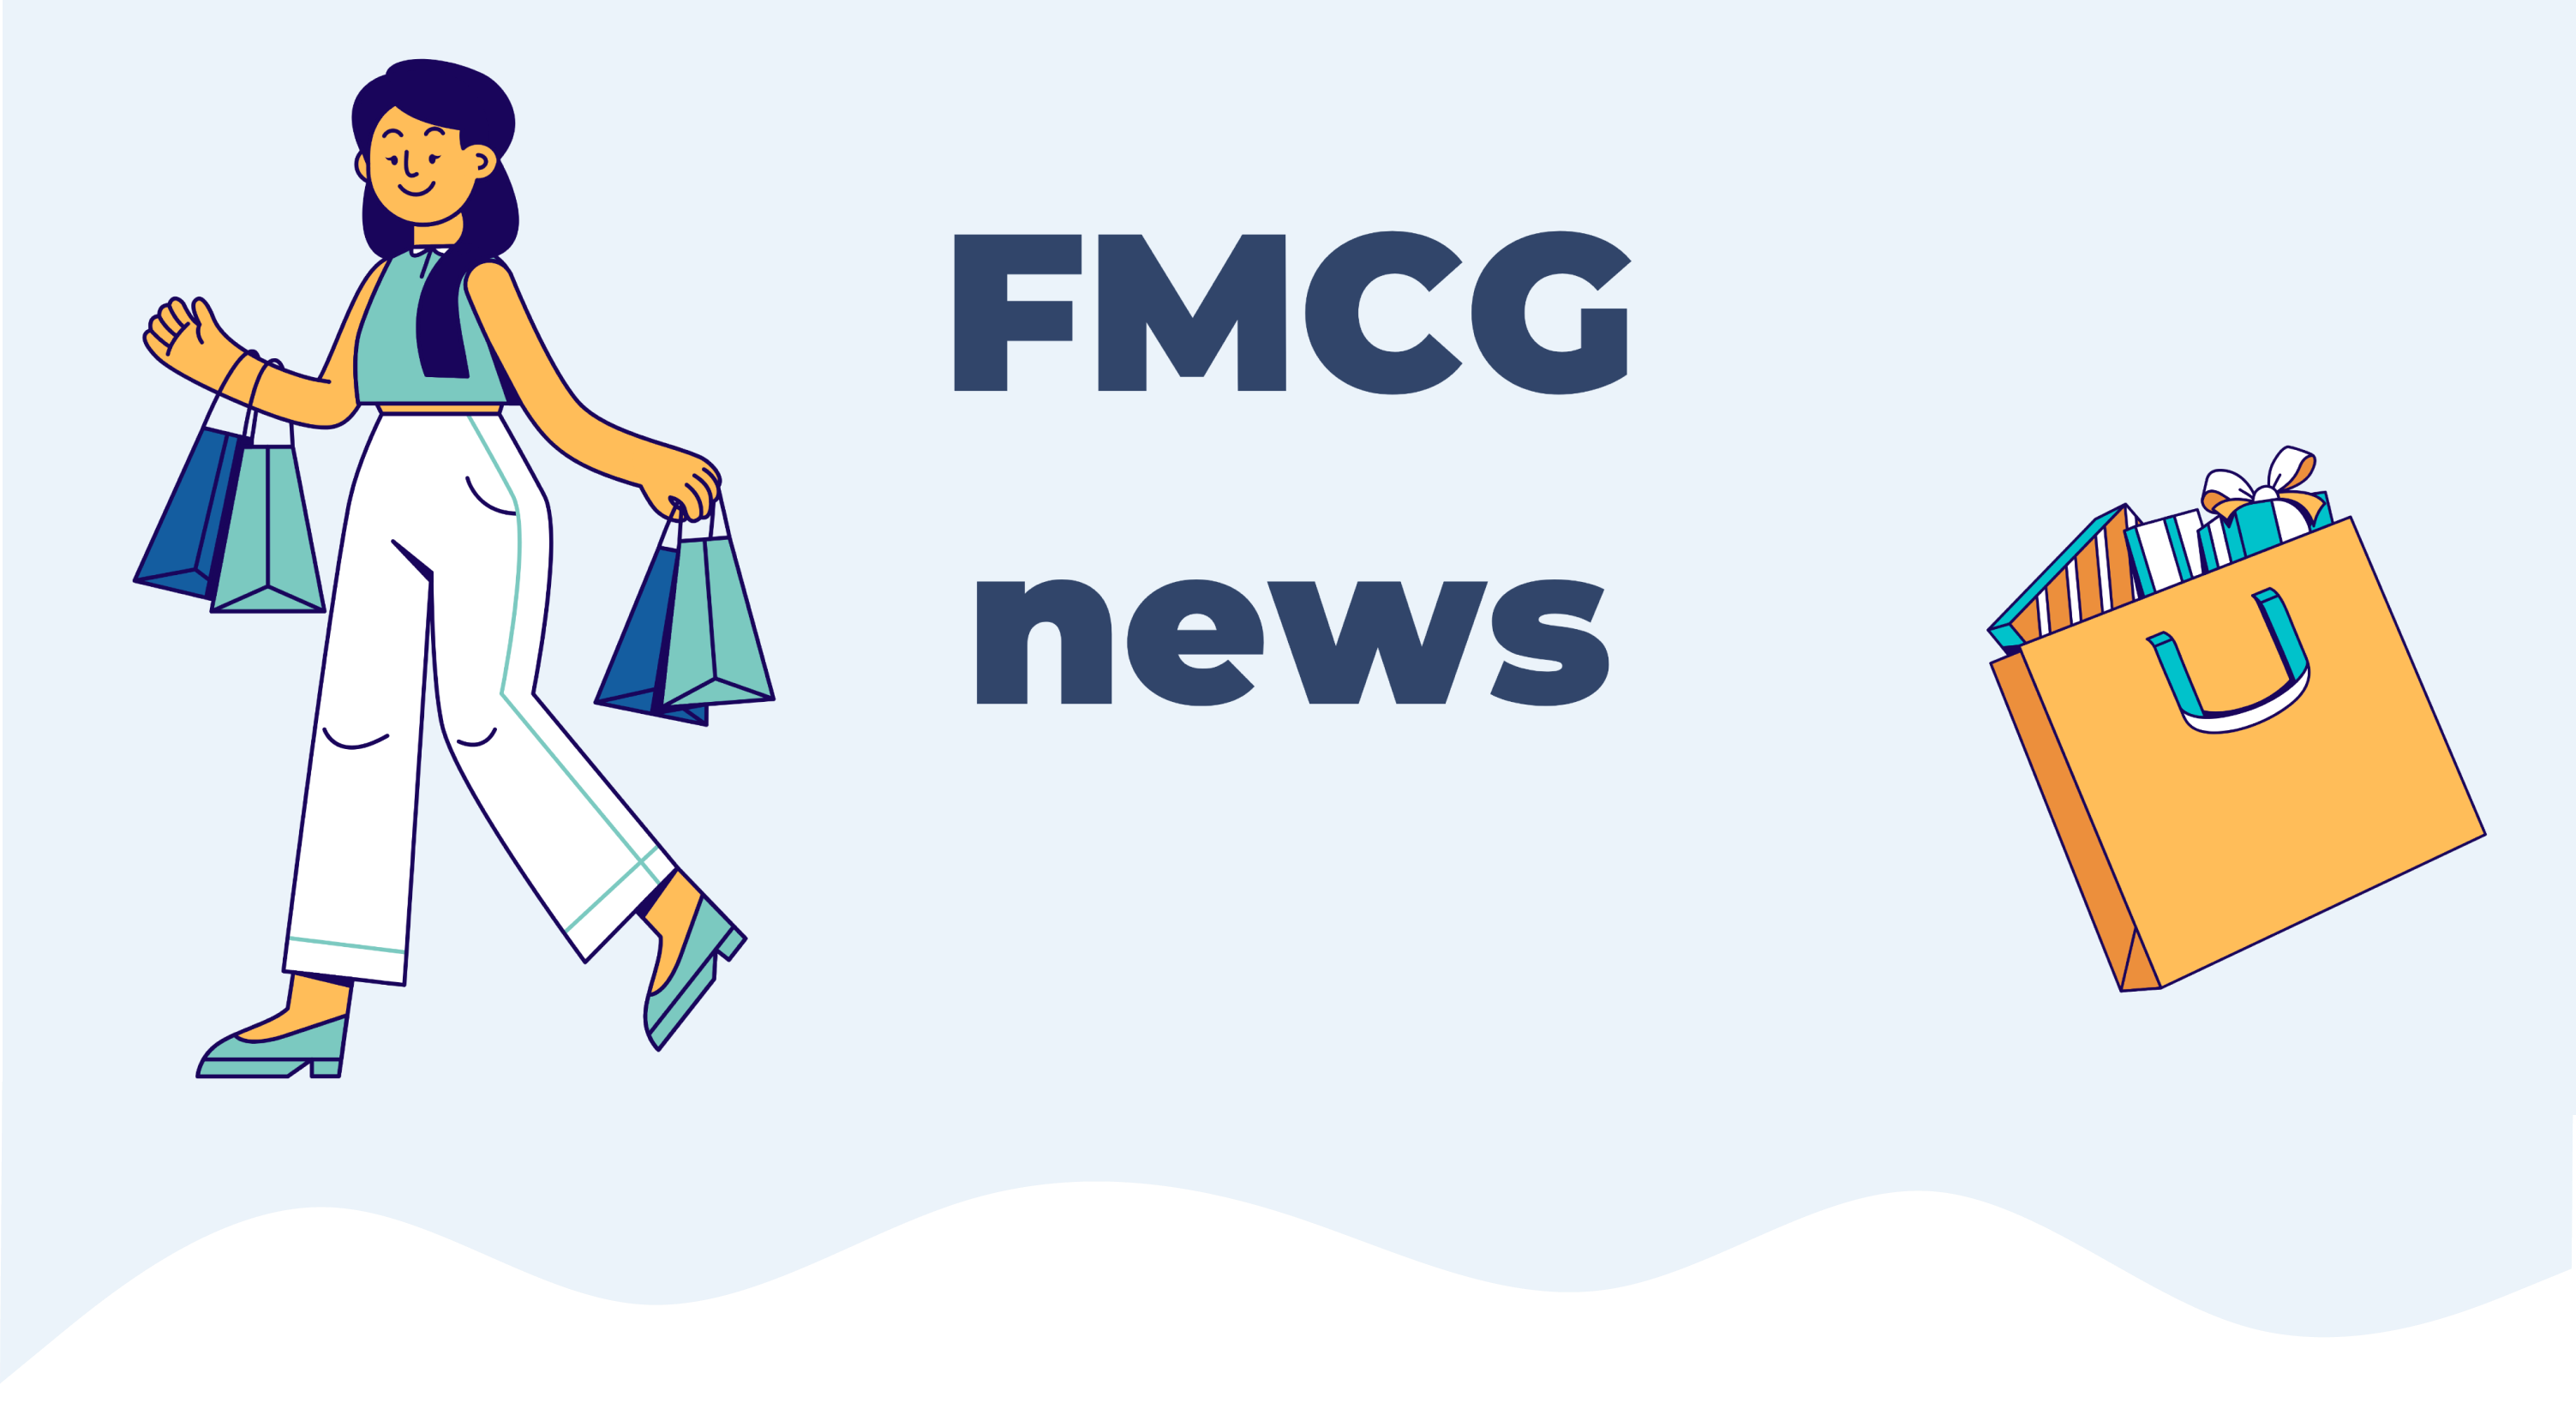 FMCG news